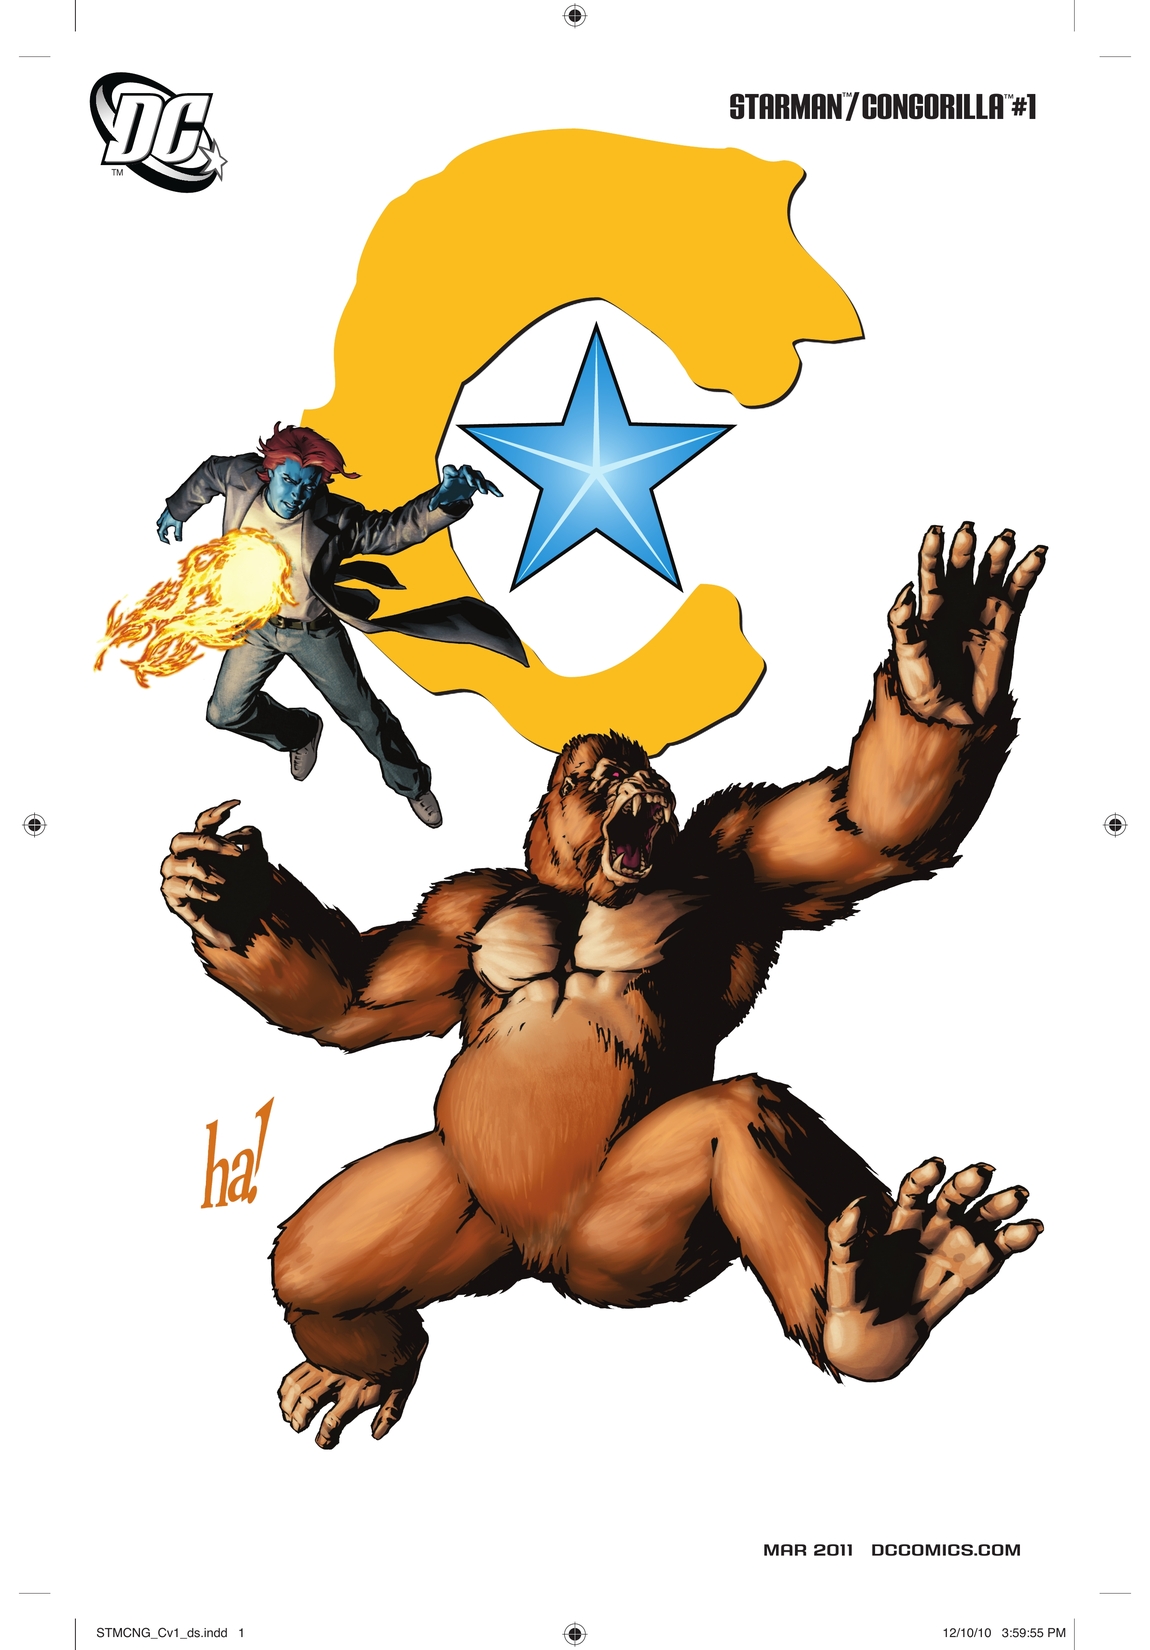 Starman/Congorilla #1 preview images